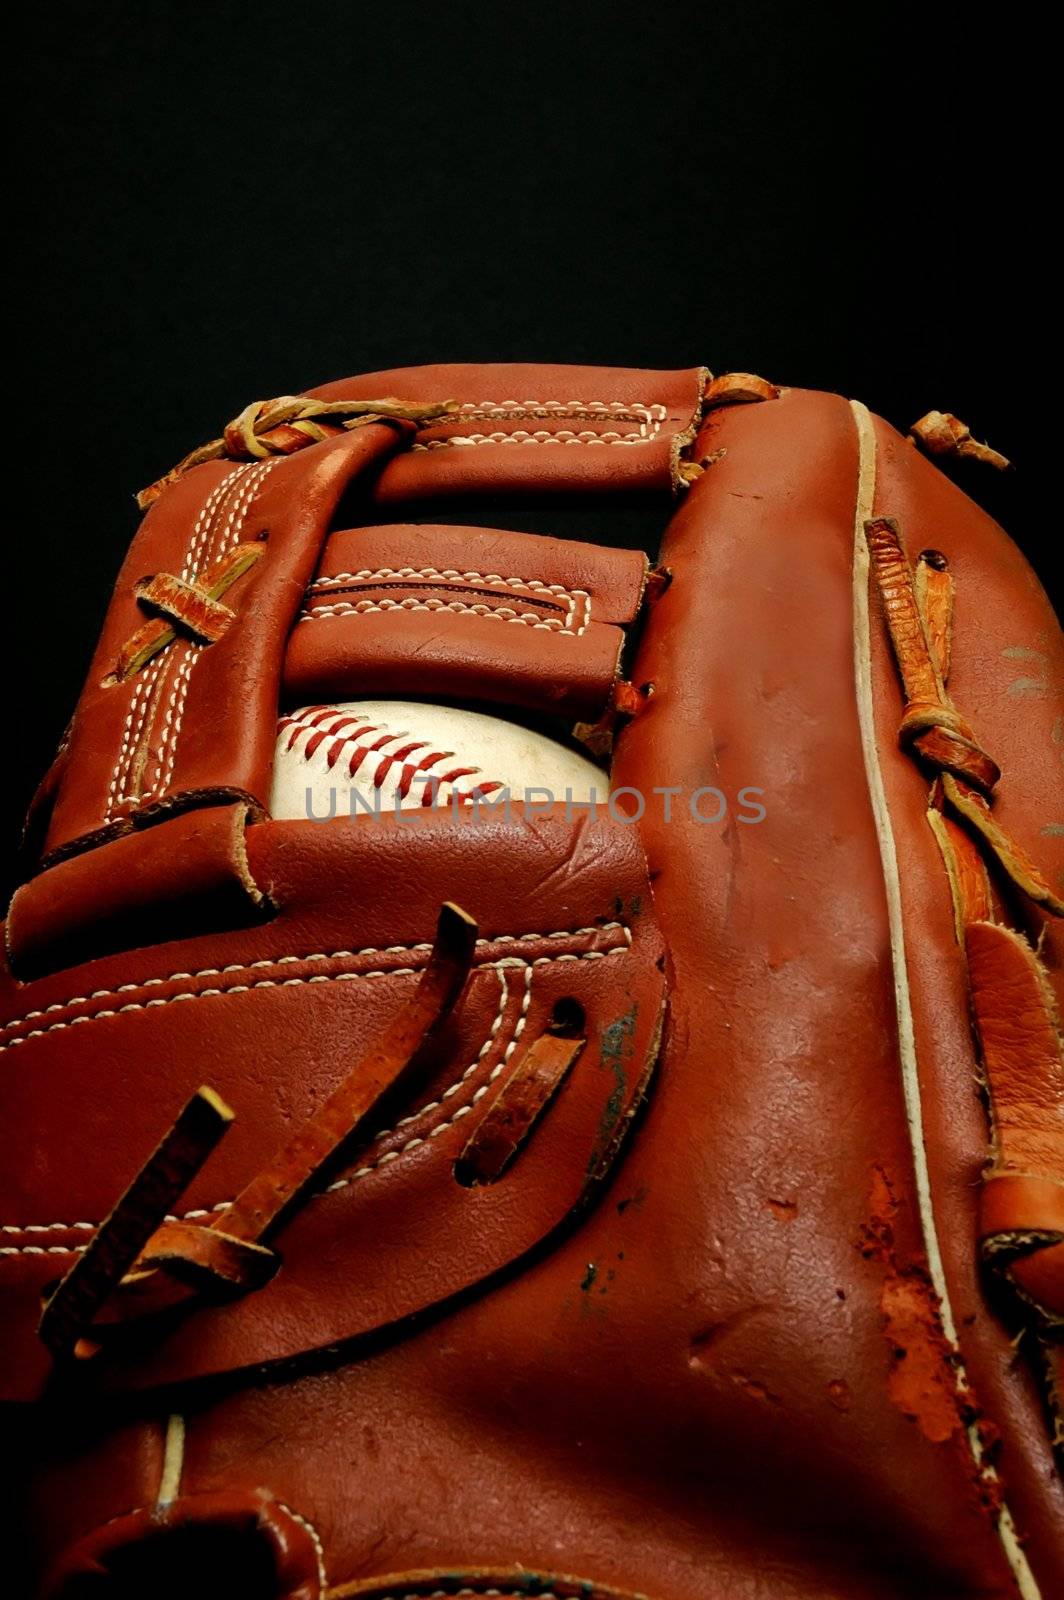 Baseball in glove on black background